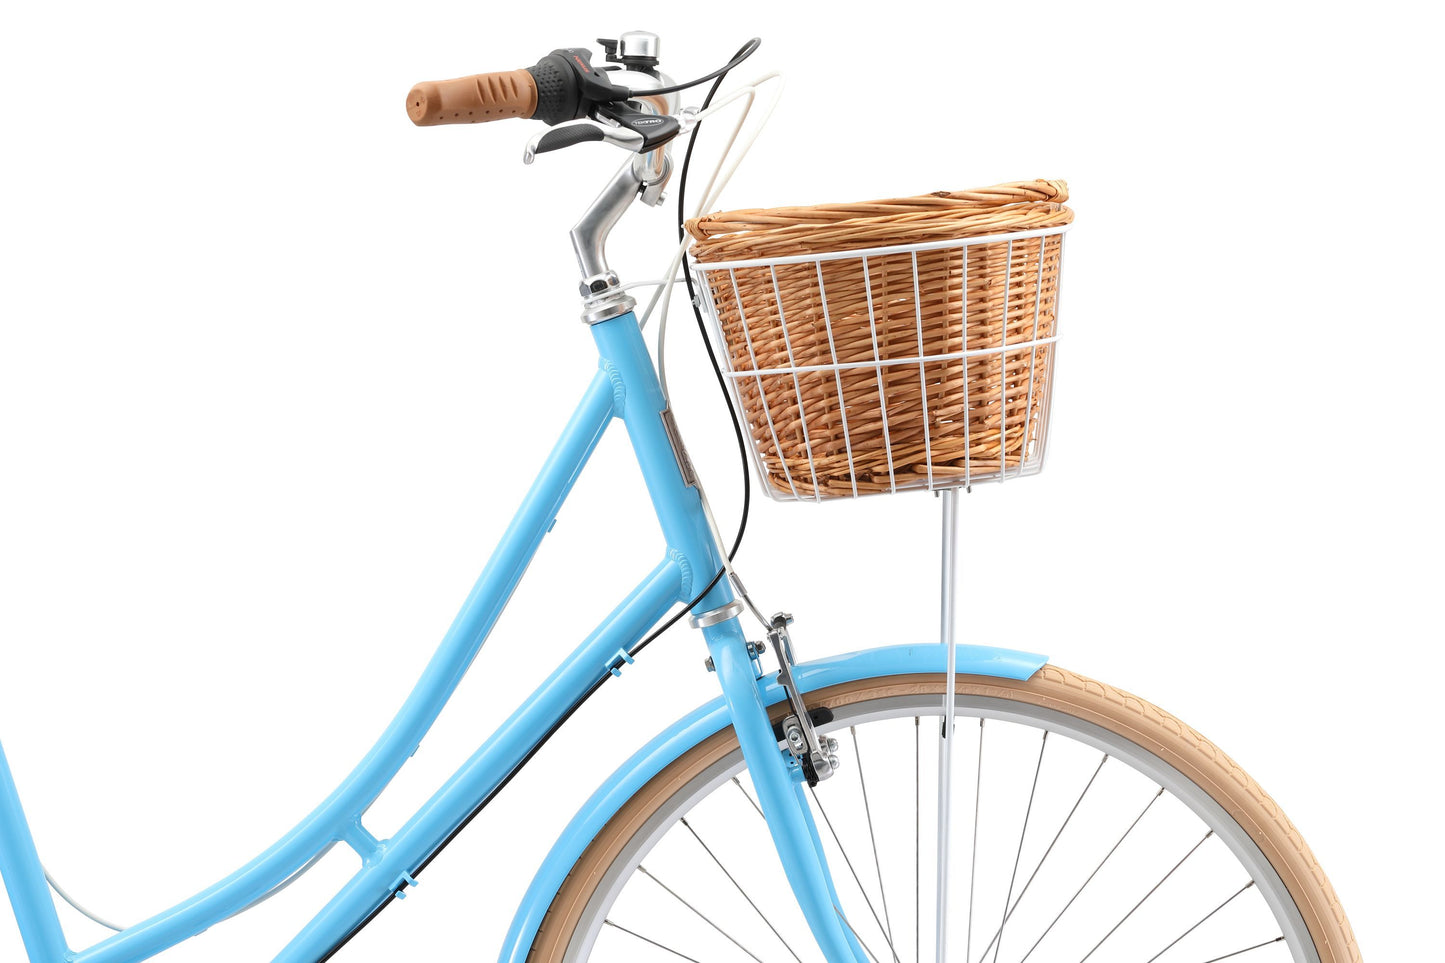 Ladies Deluxe Vintage Bike in Baby Blue showing front basket from Reid Cycles Australia